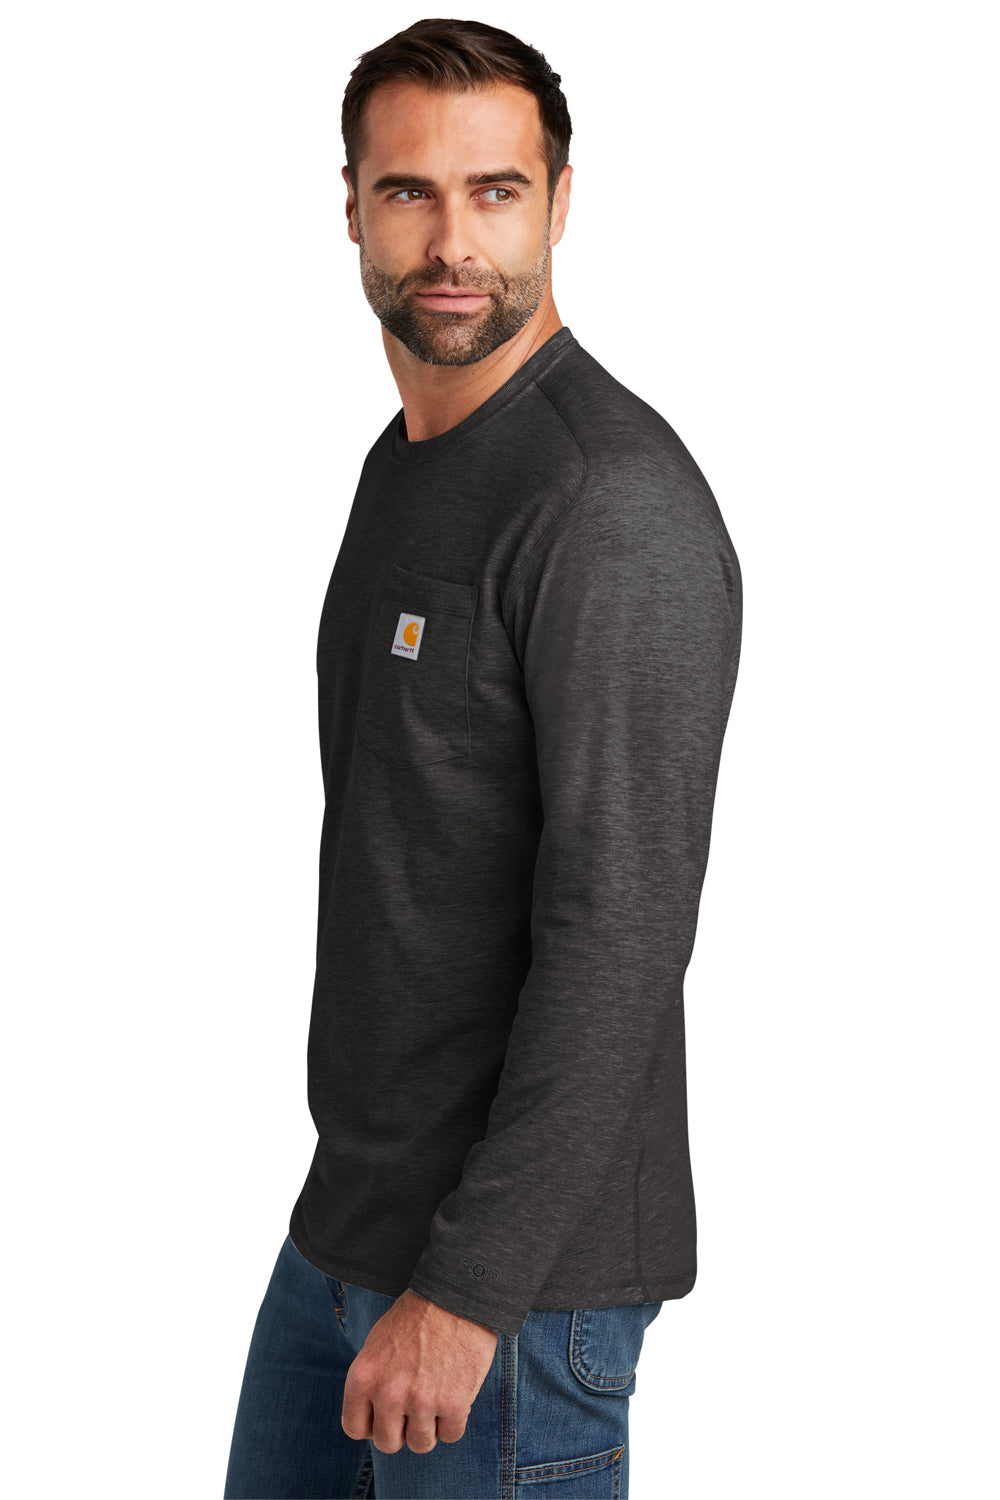 Carhartt CT104617 Mens Force Moisture Wicking Long Sleeve Crewneck T-Shirt w/ Pocket Heather Carbon Grey Model Side